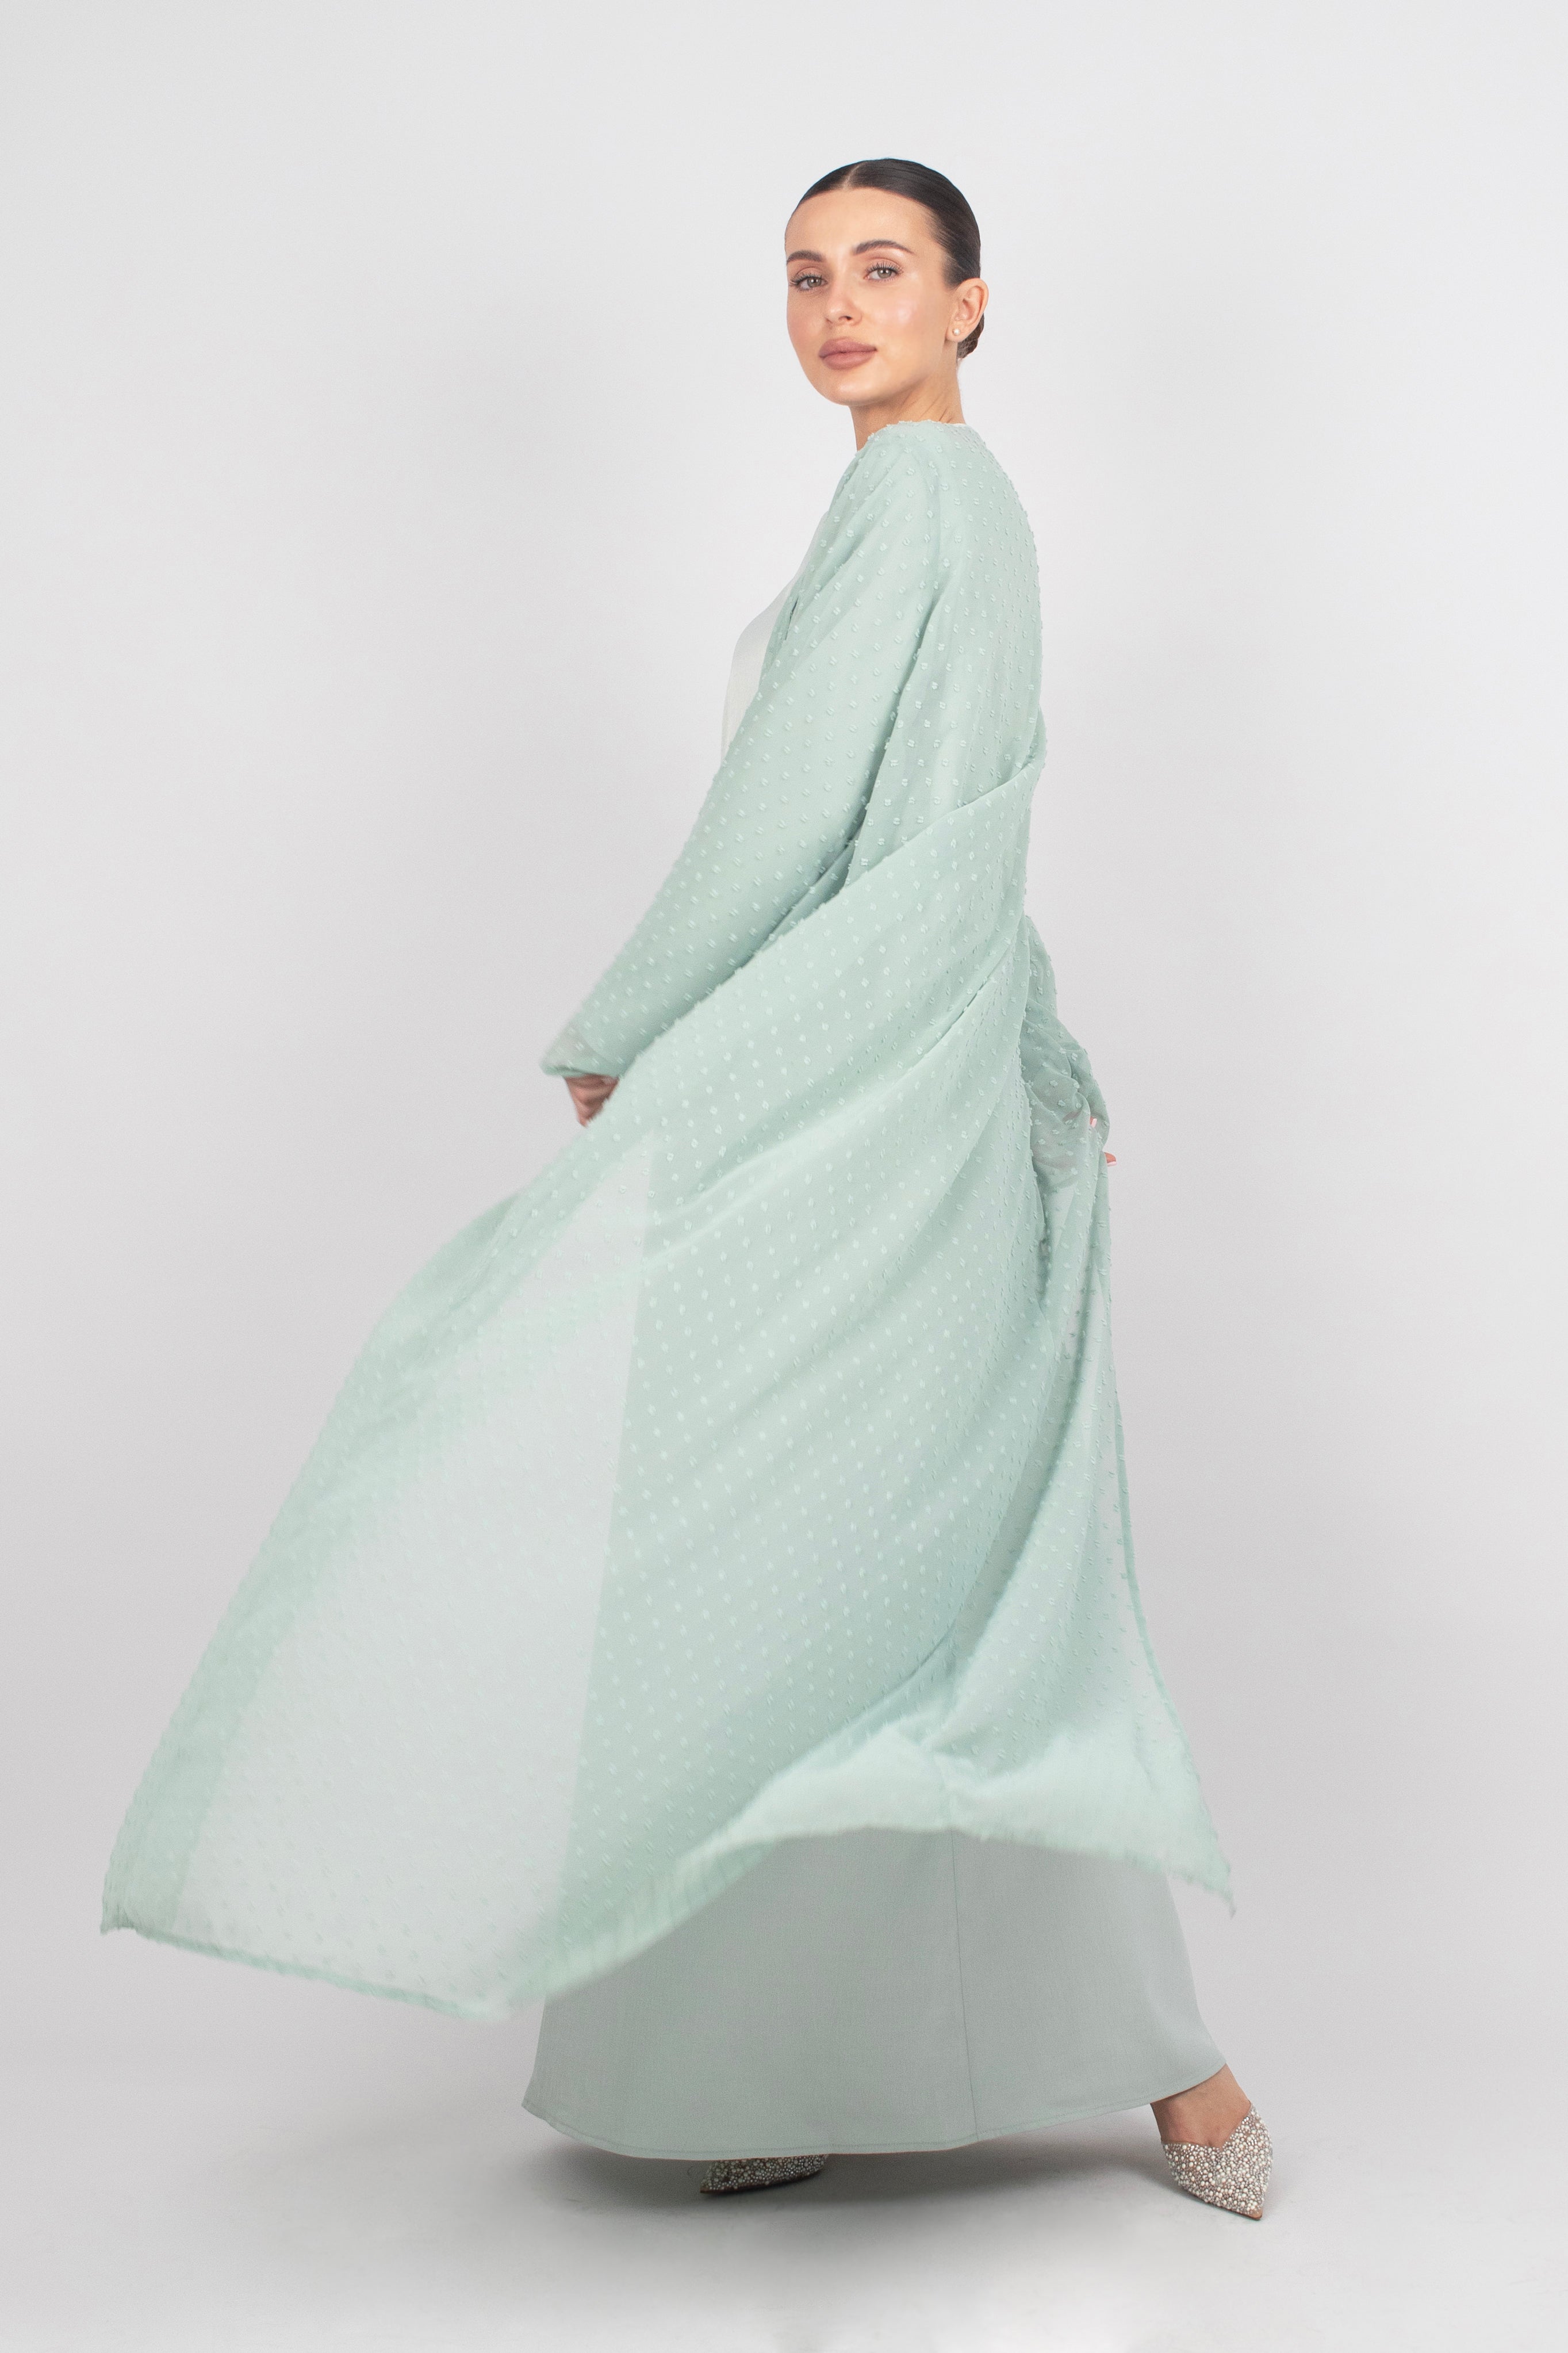 CA - Sheer Abaya and Dress Set - Sea Mist